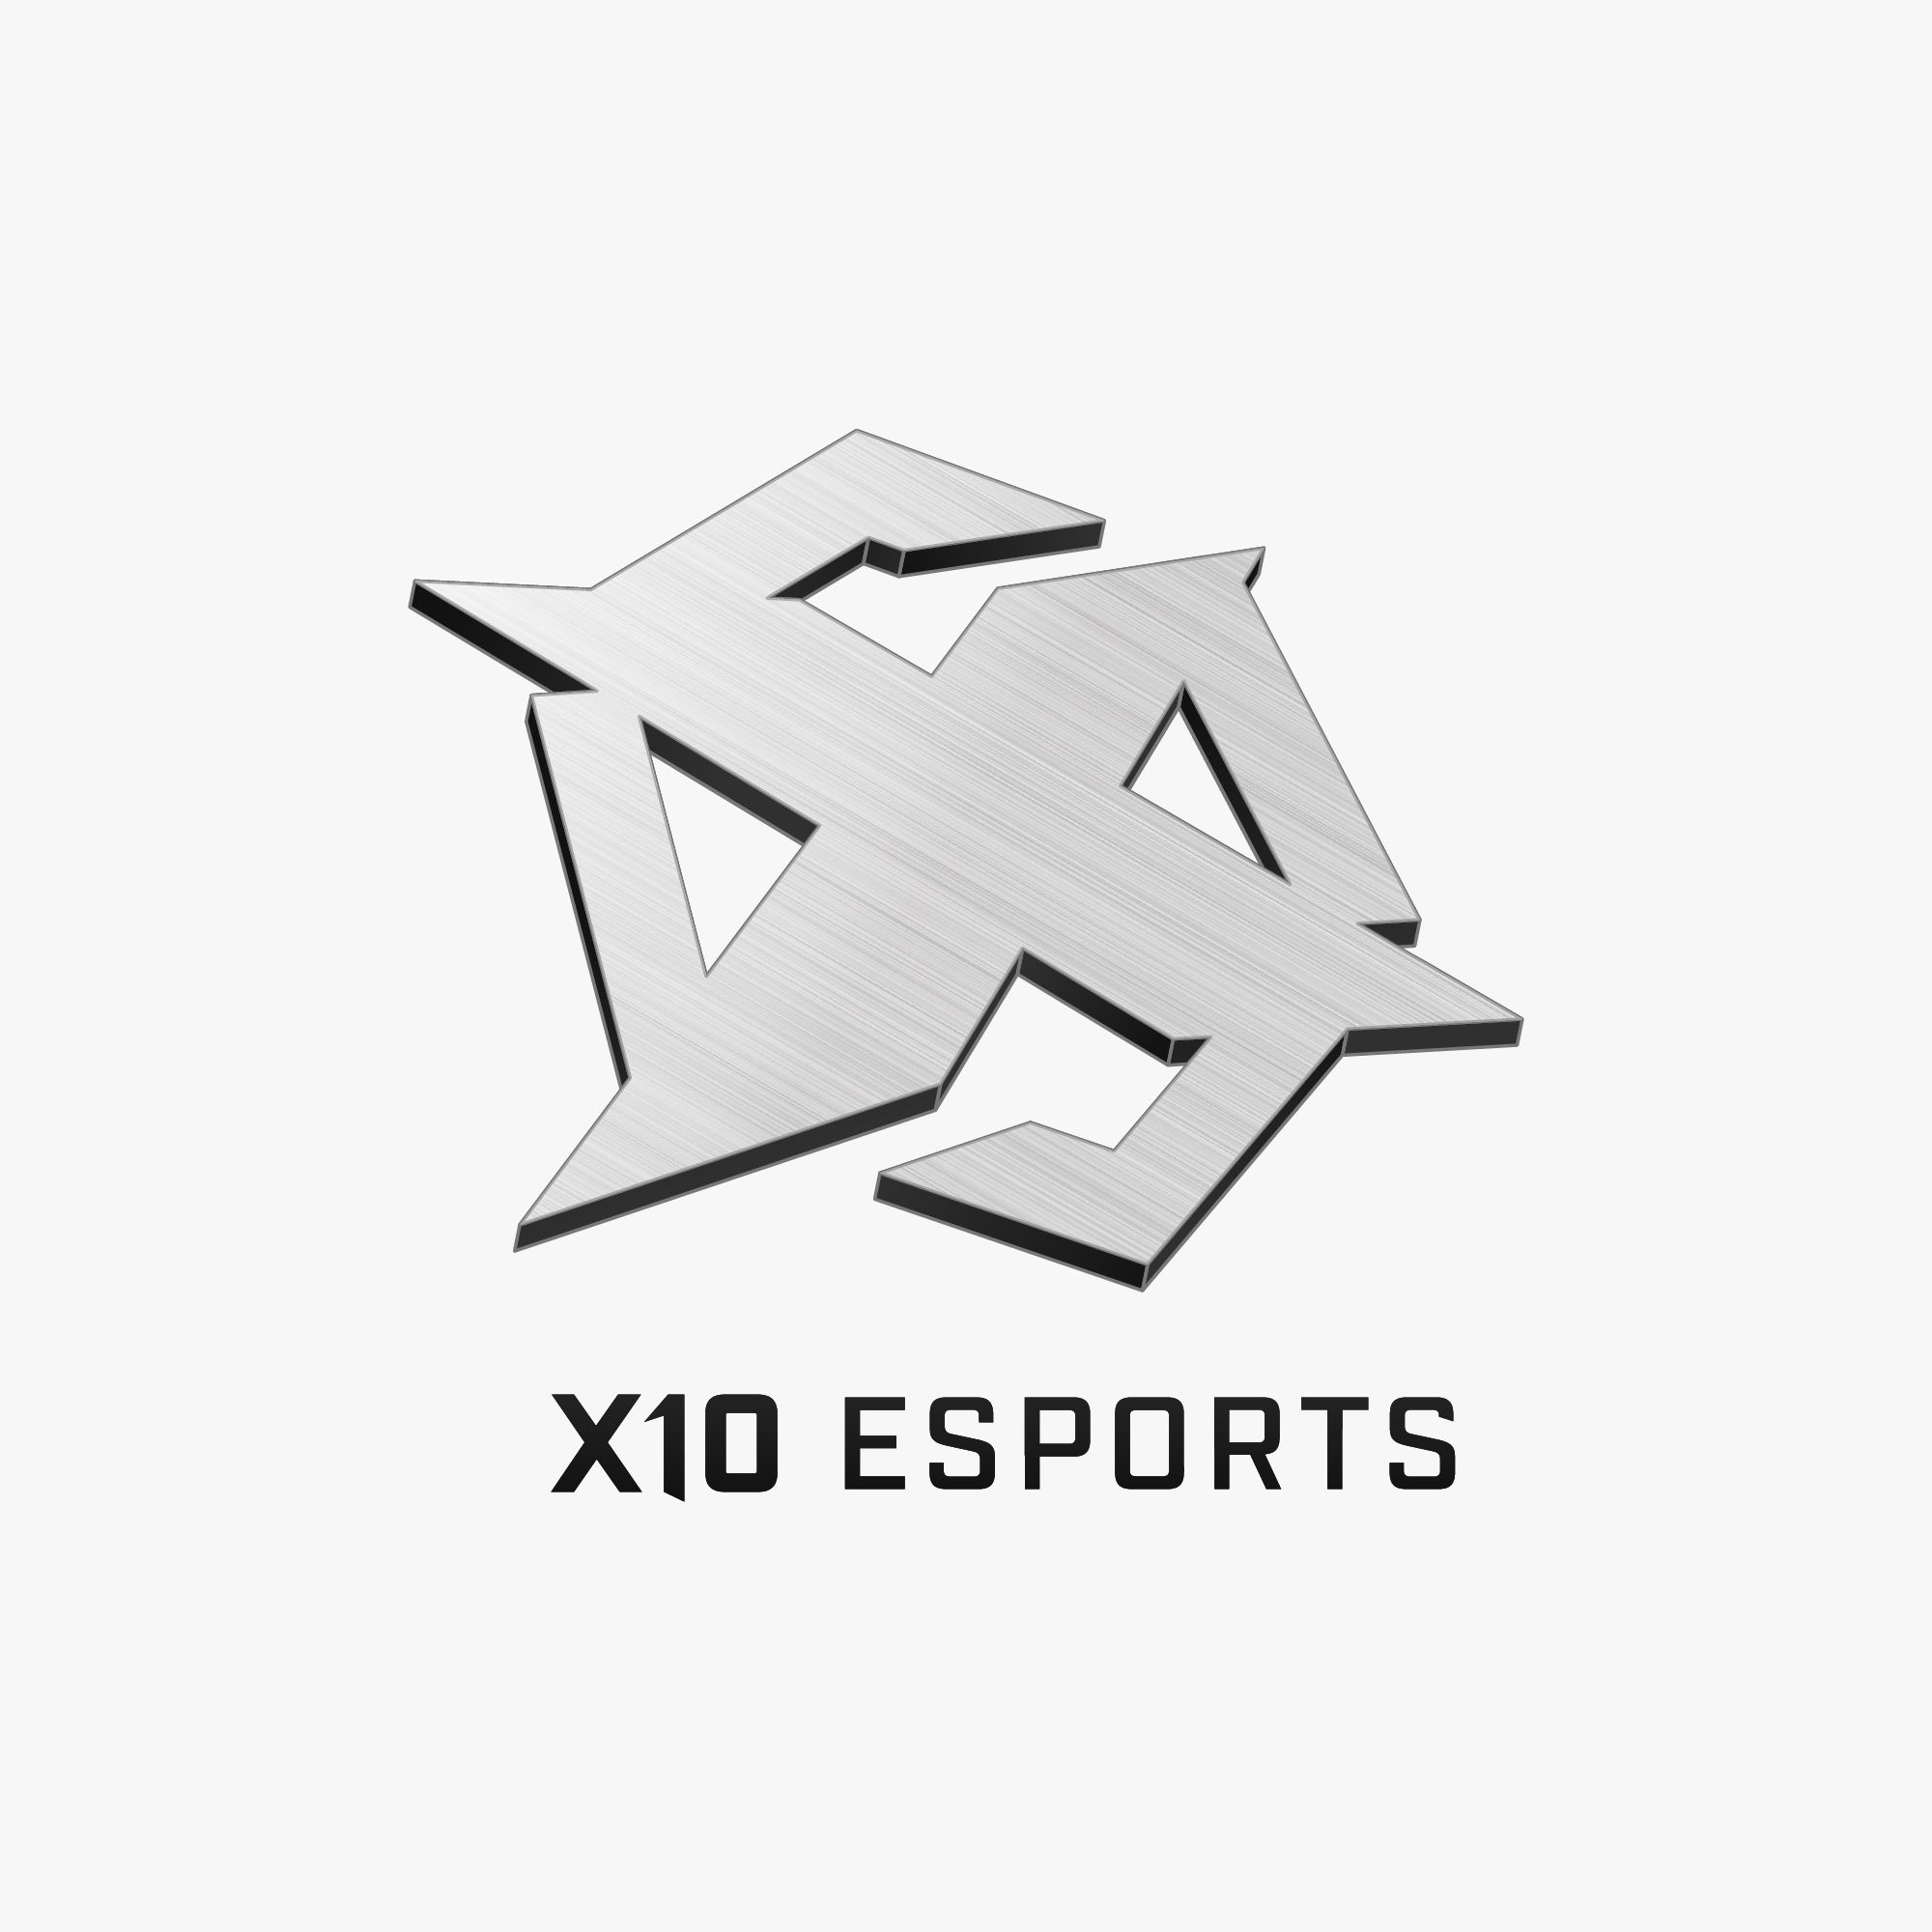 X10 Esports